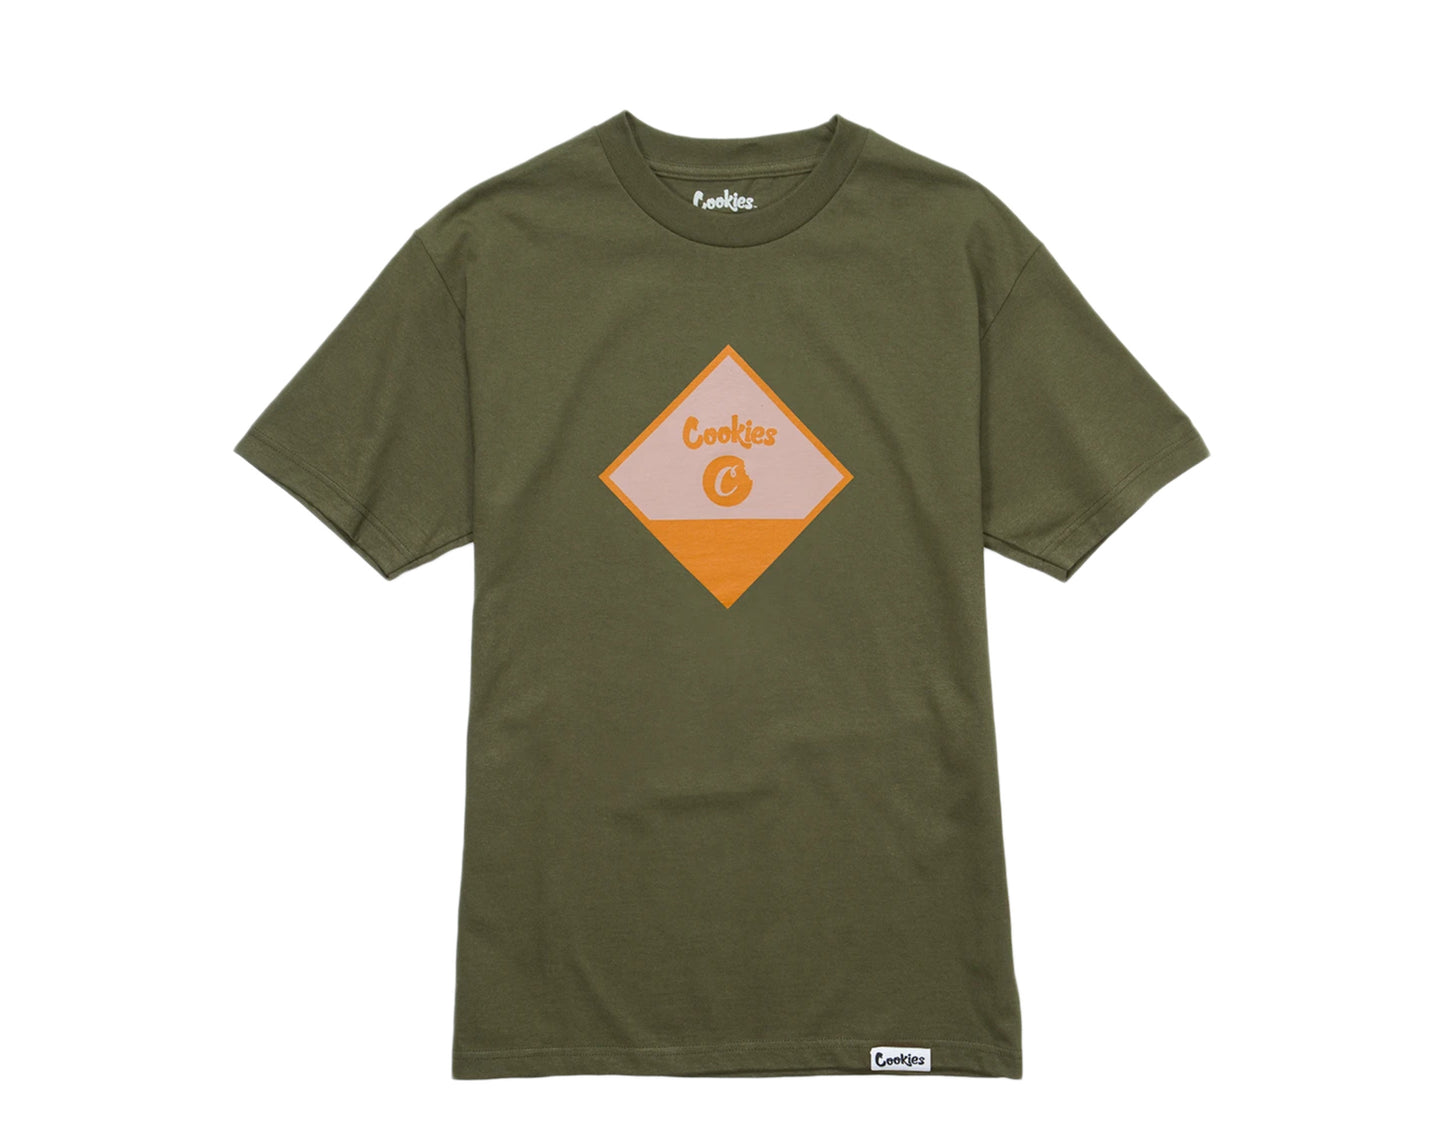 Cookies Botanical Logo Olive/Orange Men's Tee Shirt 1545T4099-OLI